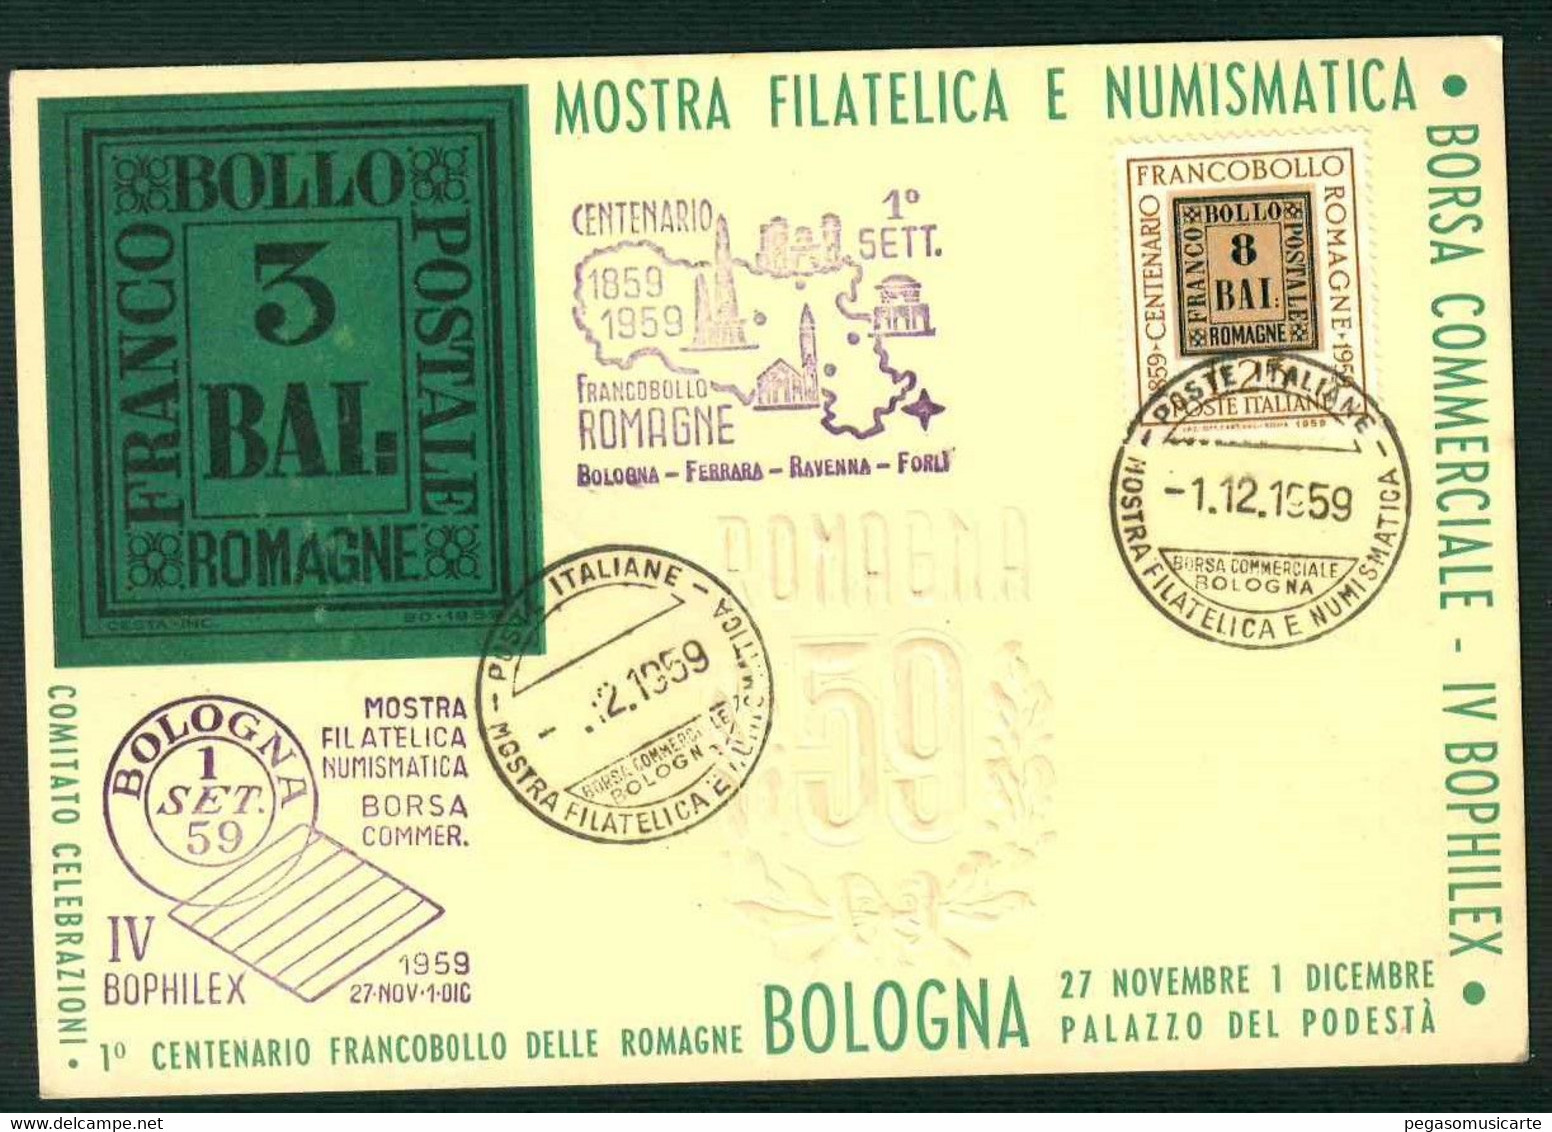 CLH415 - MOSTRA FILATELICA E NUMISMATICA BORSA COMMERCIALE IV BOPHILEX BOLOGNA 1959 STORIA POSTALE MARCOFILIA - Bourses & Salons De Collections